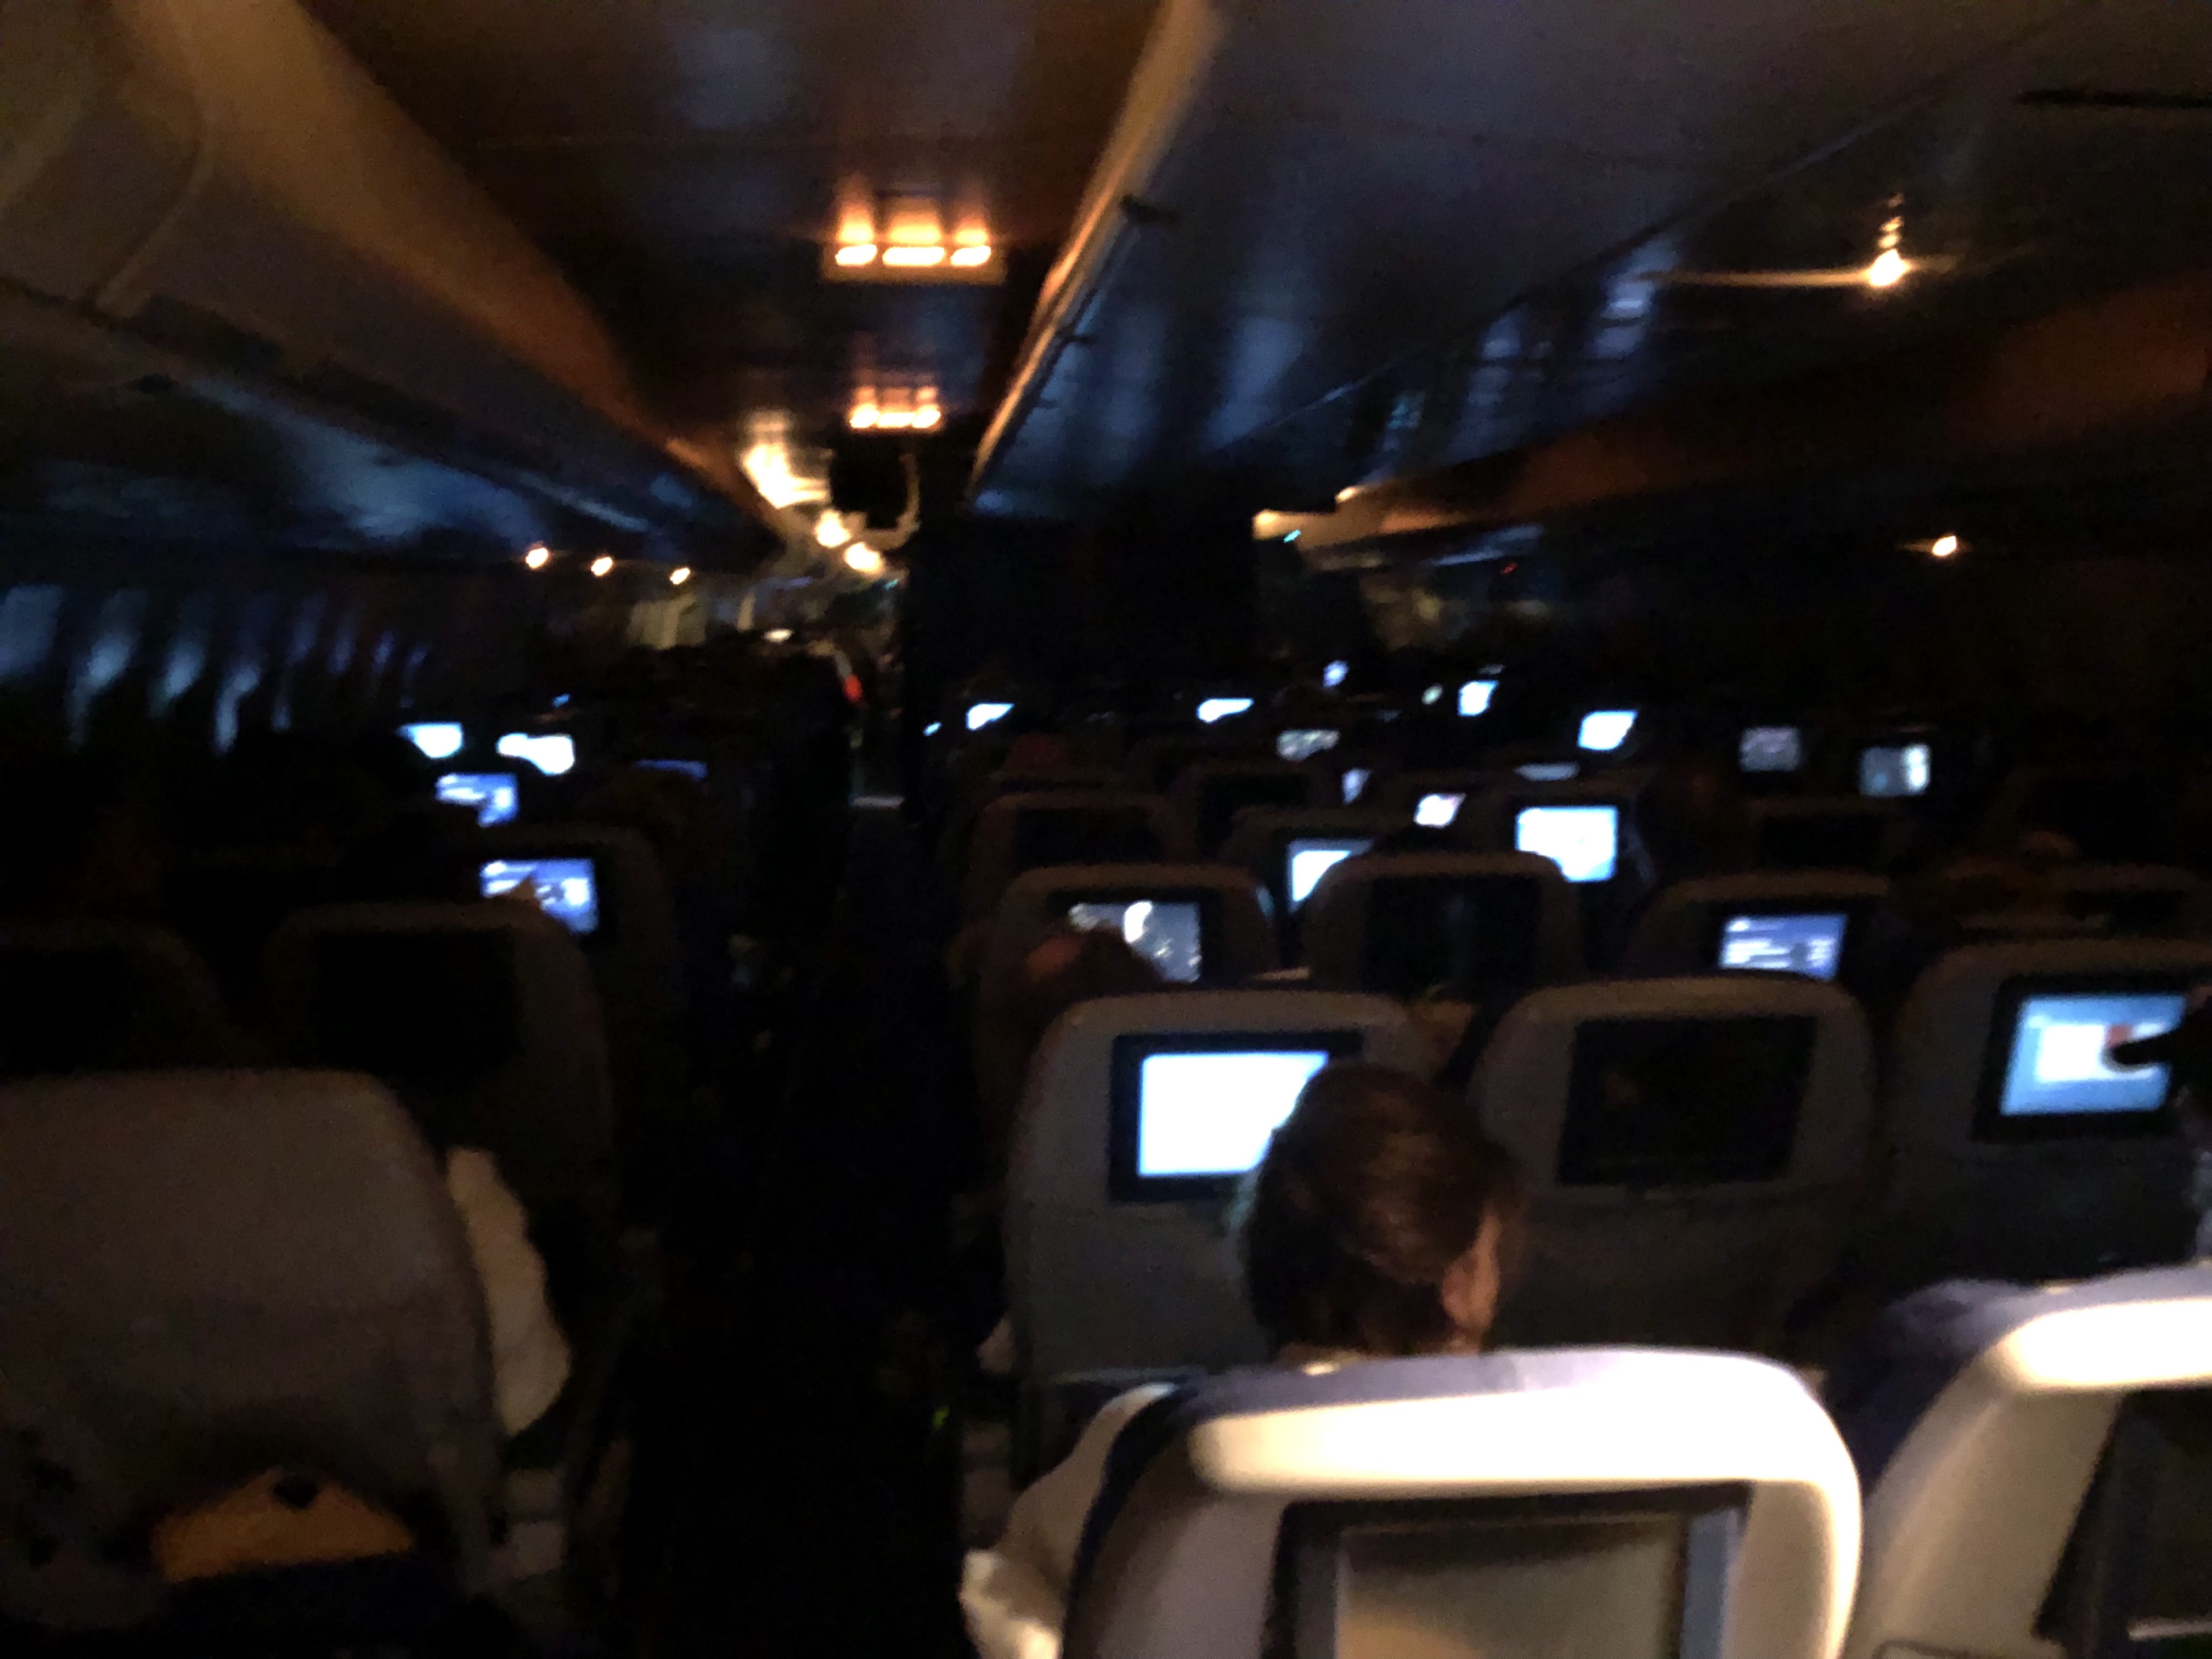 KLM 747 economy cabin at night sleeping